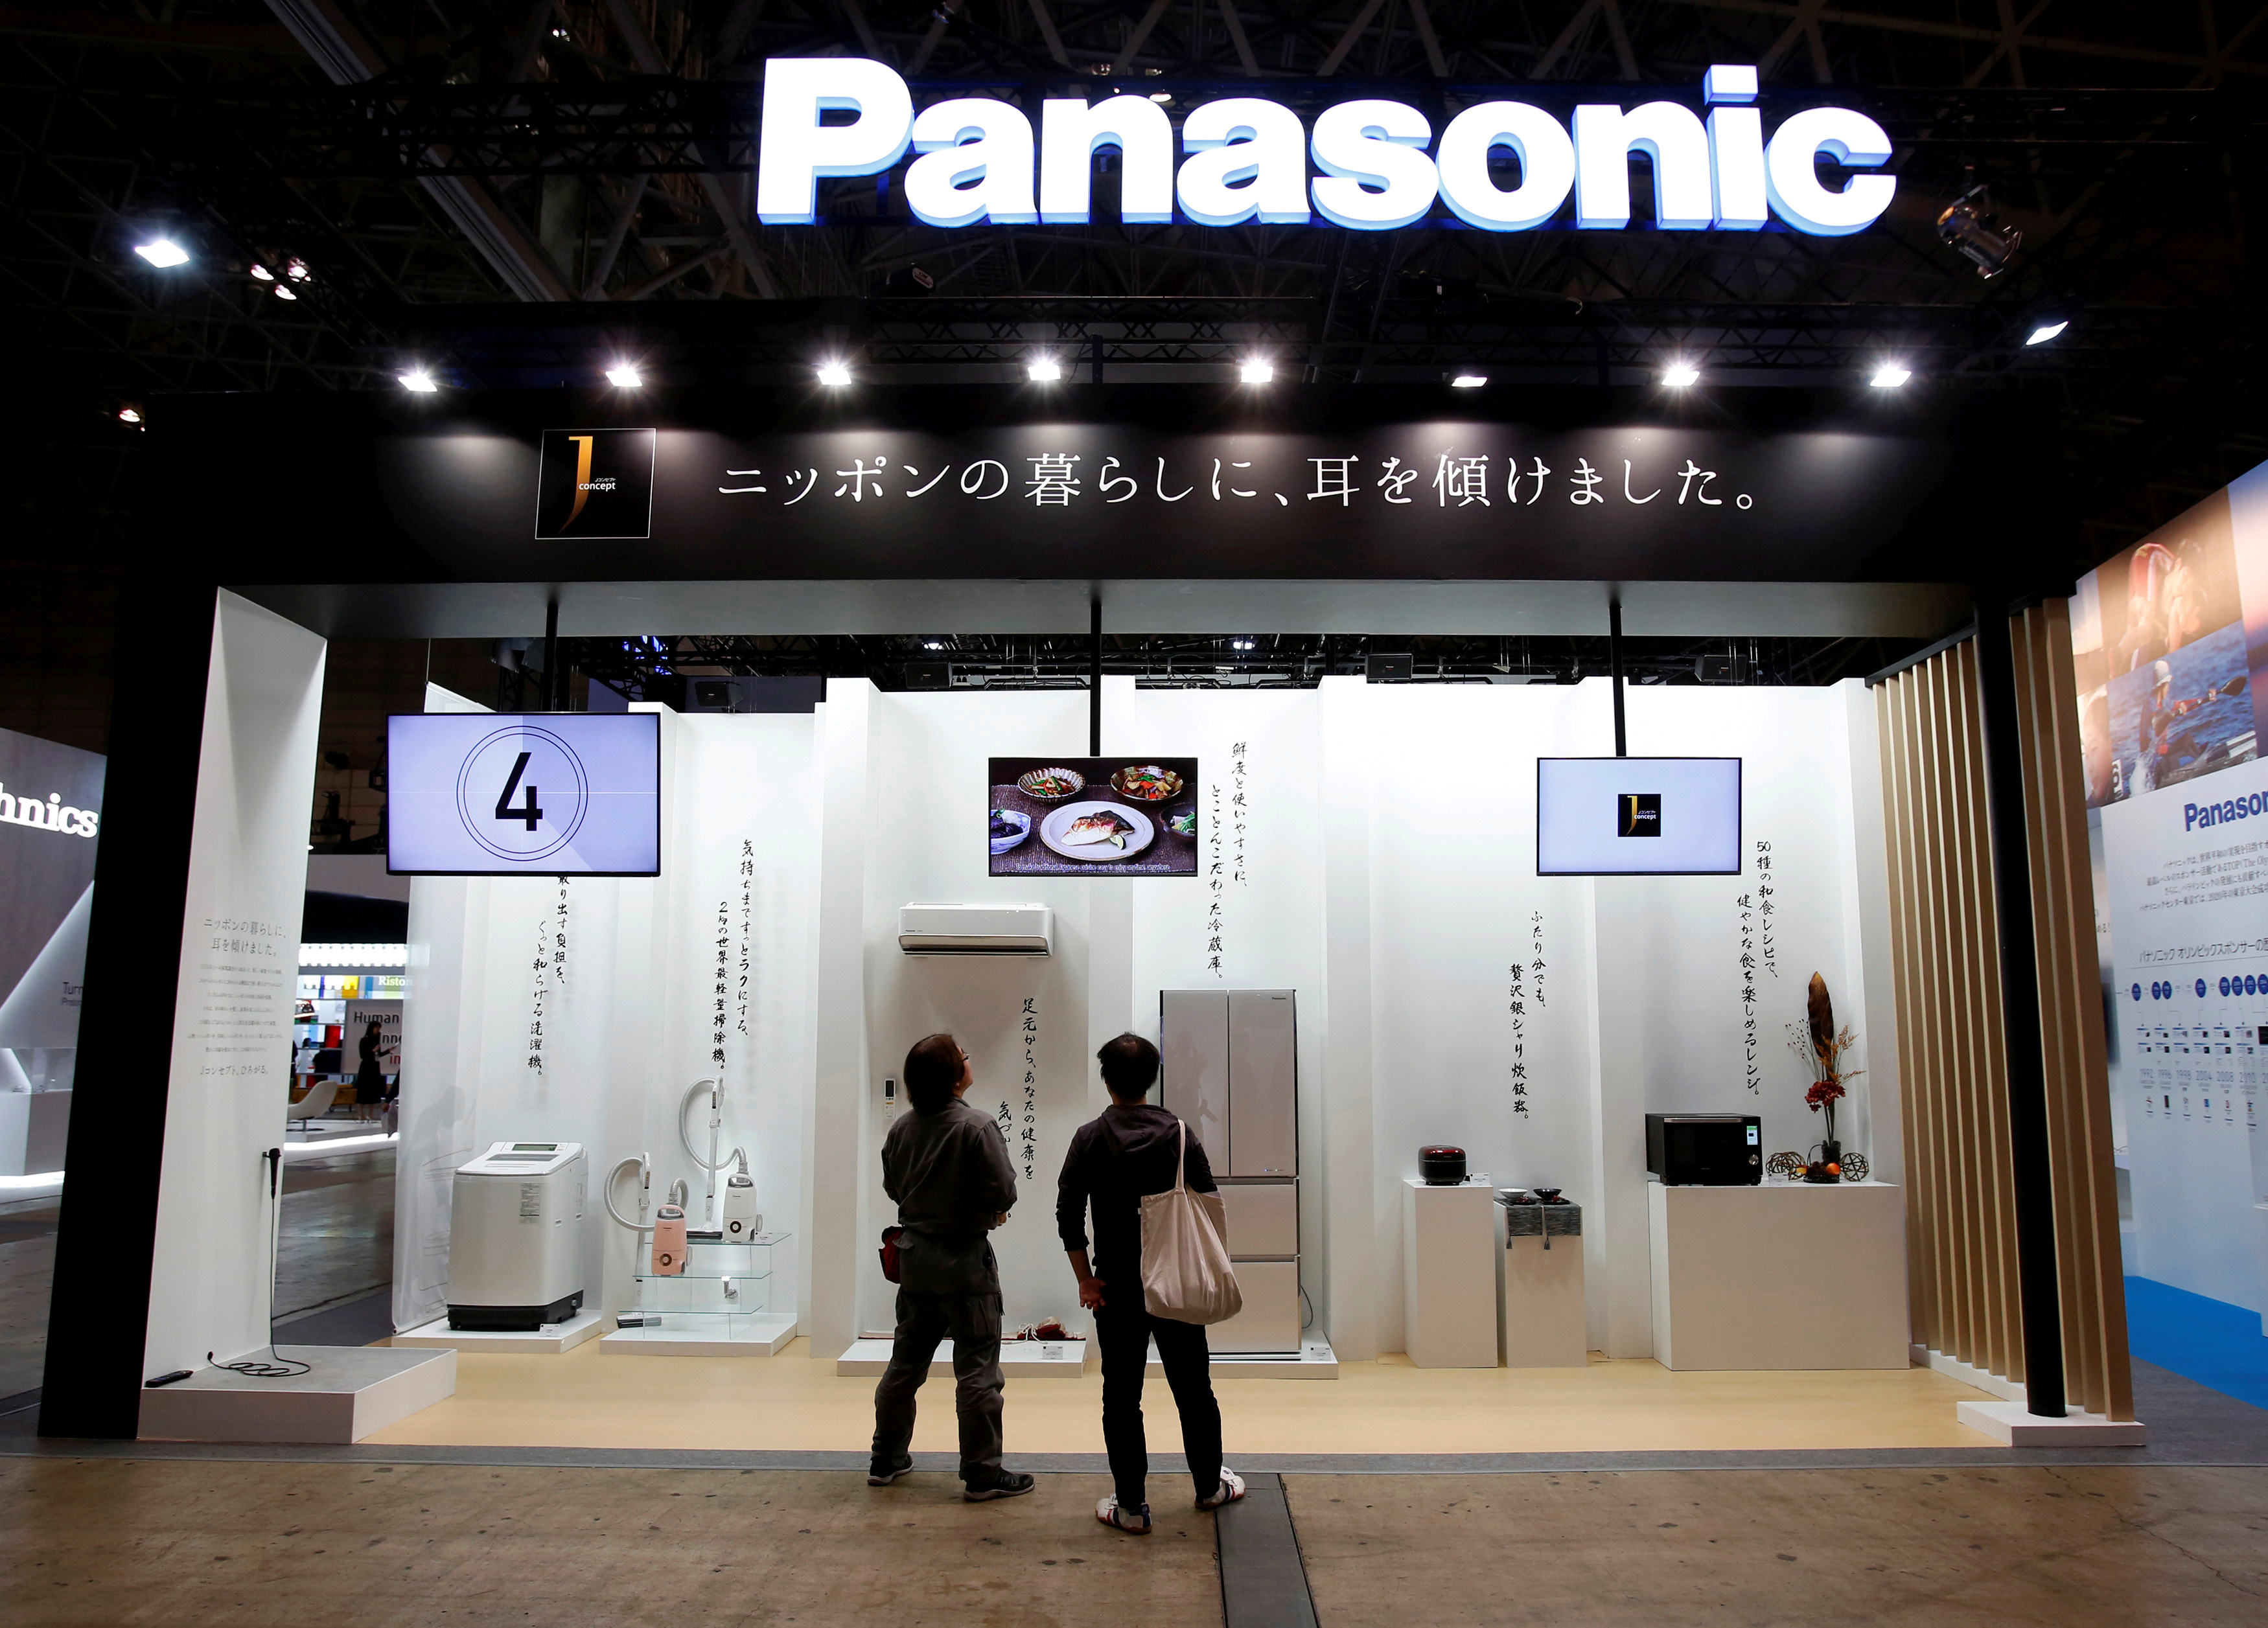 Panasonic Q1 profit jumps, keeps full-year forecast | Reuters